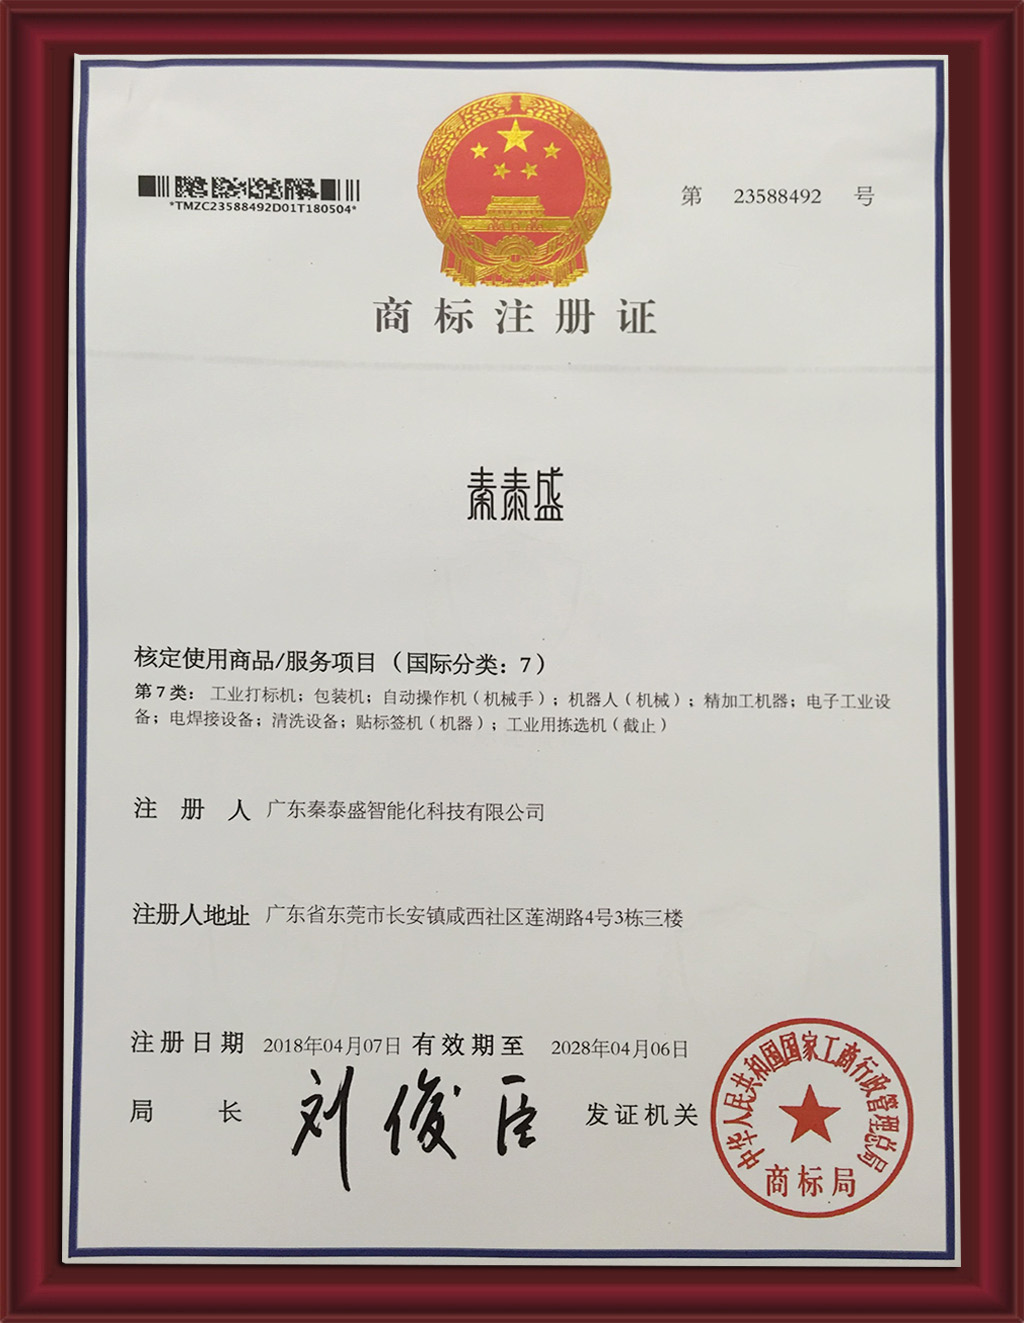 Chinese LOGO trademark registration certificate